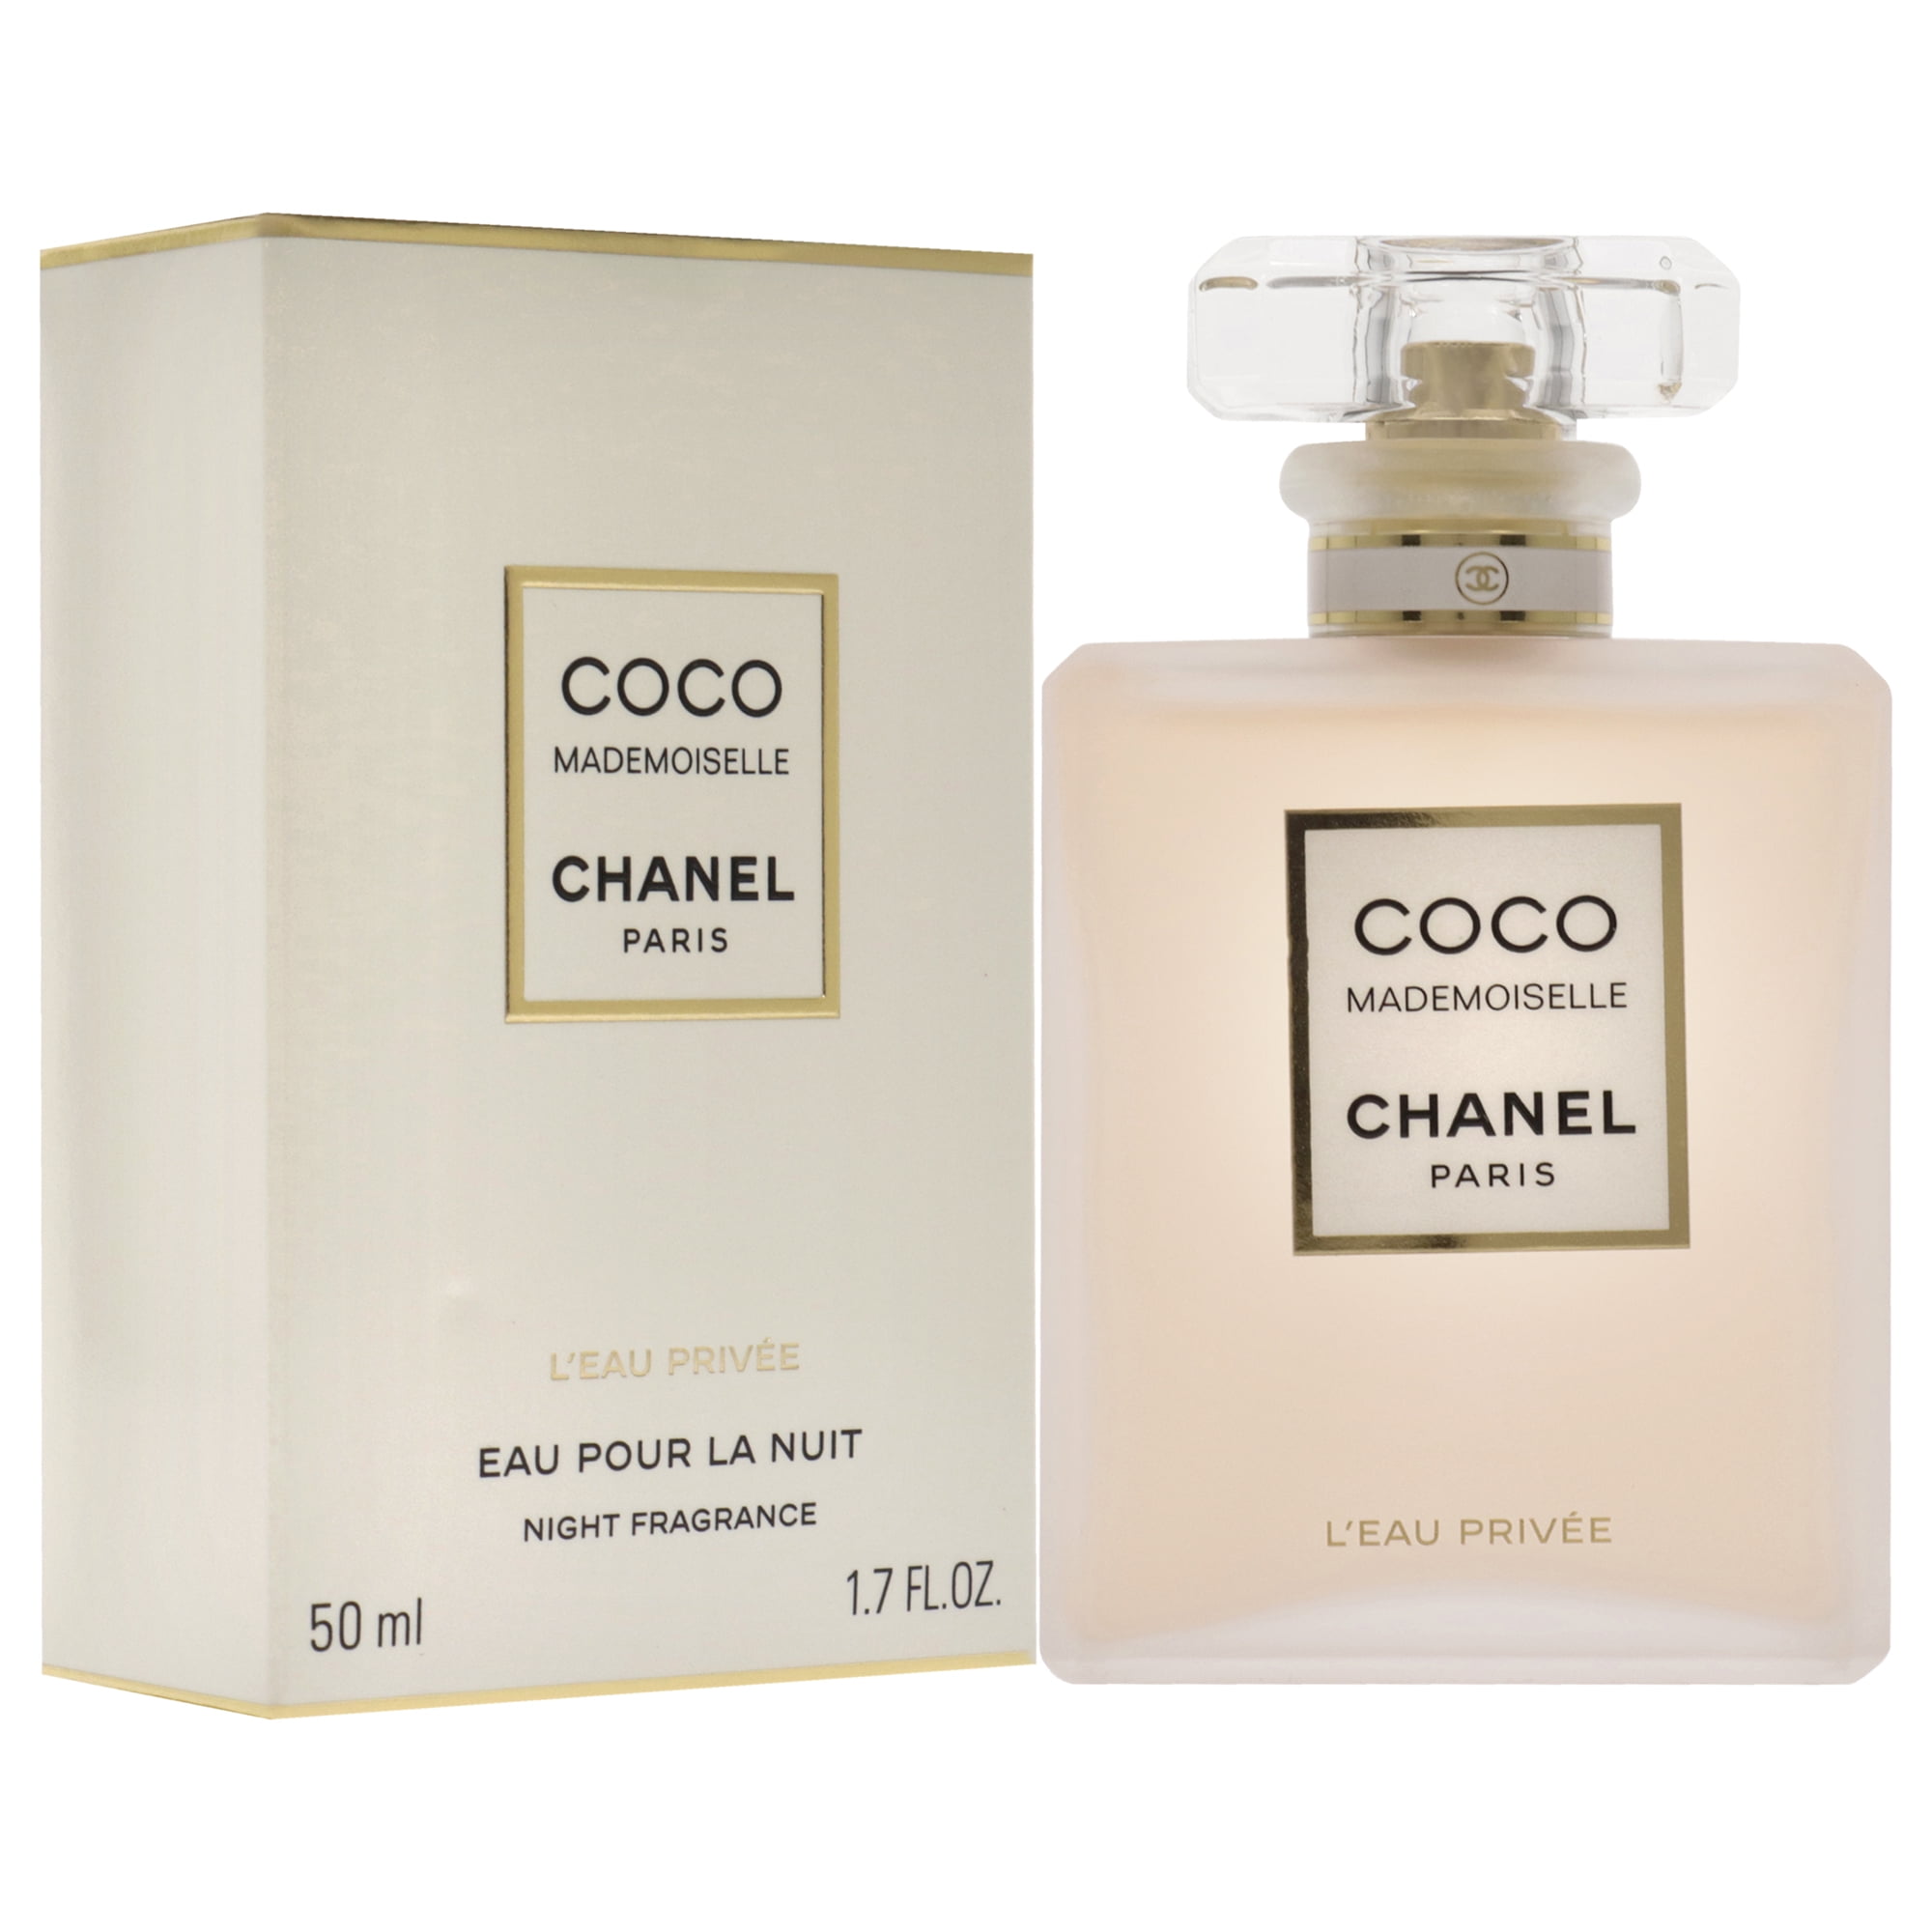 Chanel Coco Mademoiselle Eau de Toilette 1.7 oz. Spray Perfume